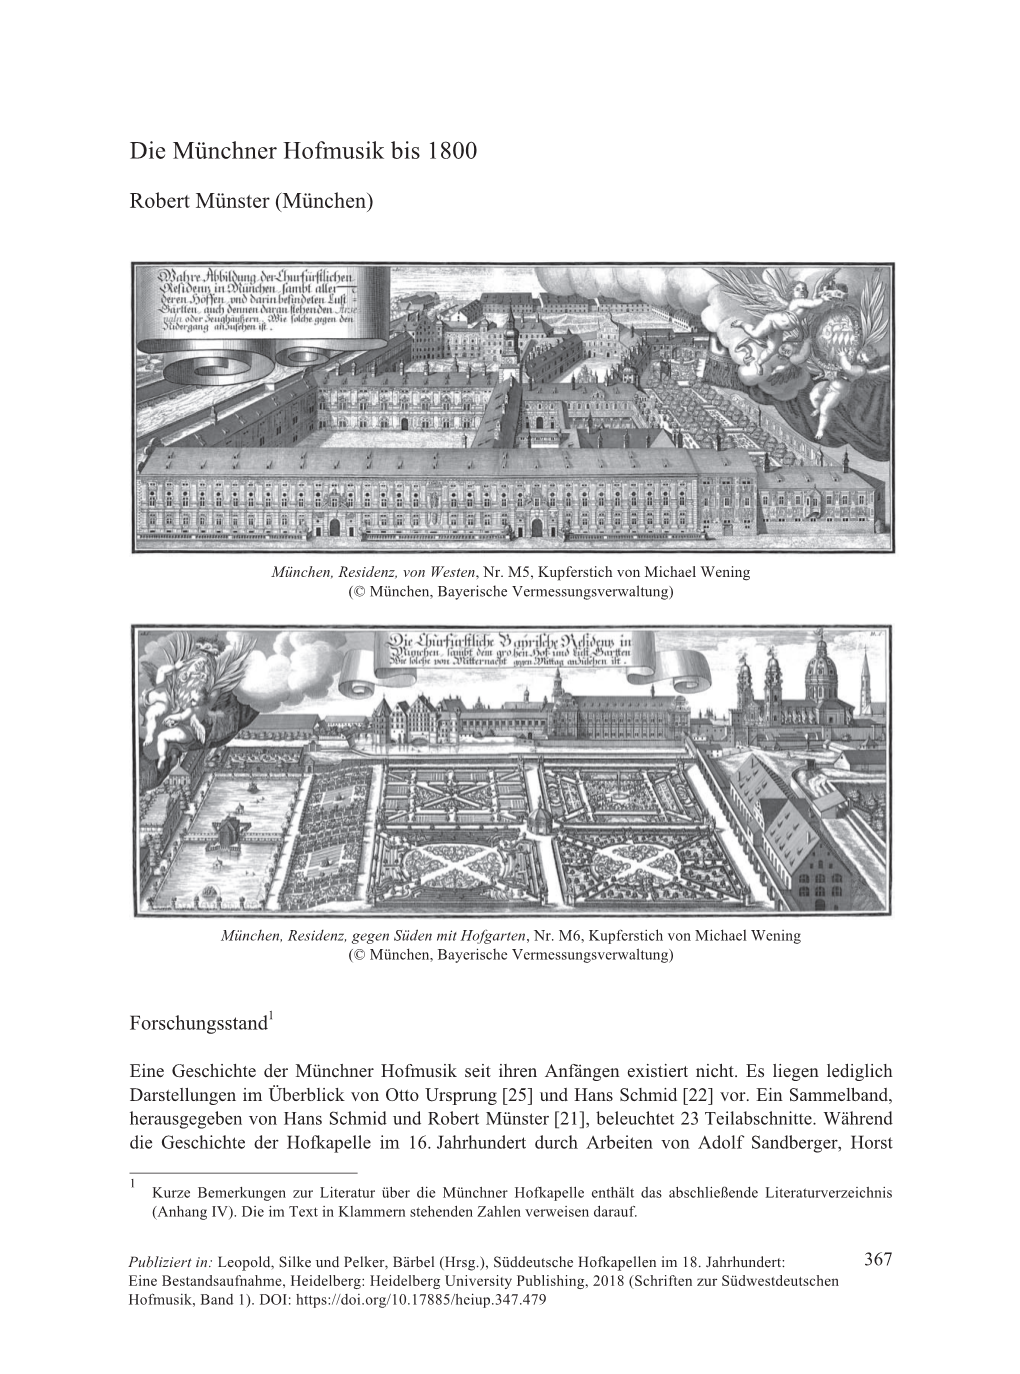 Die Münchner Hofmusik Bis 1800